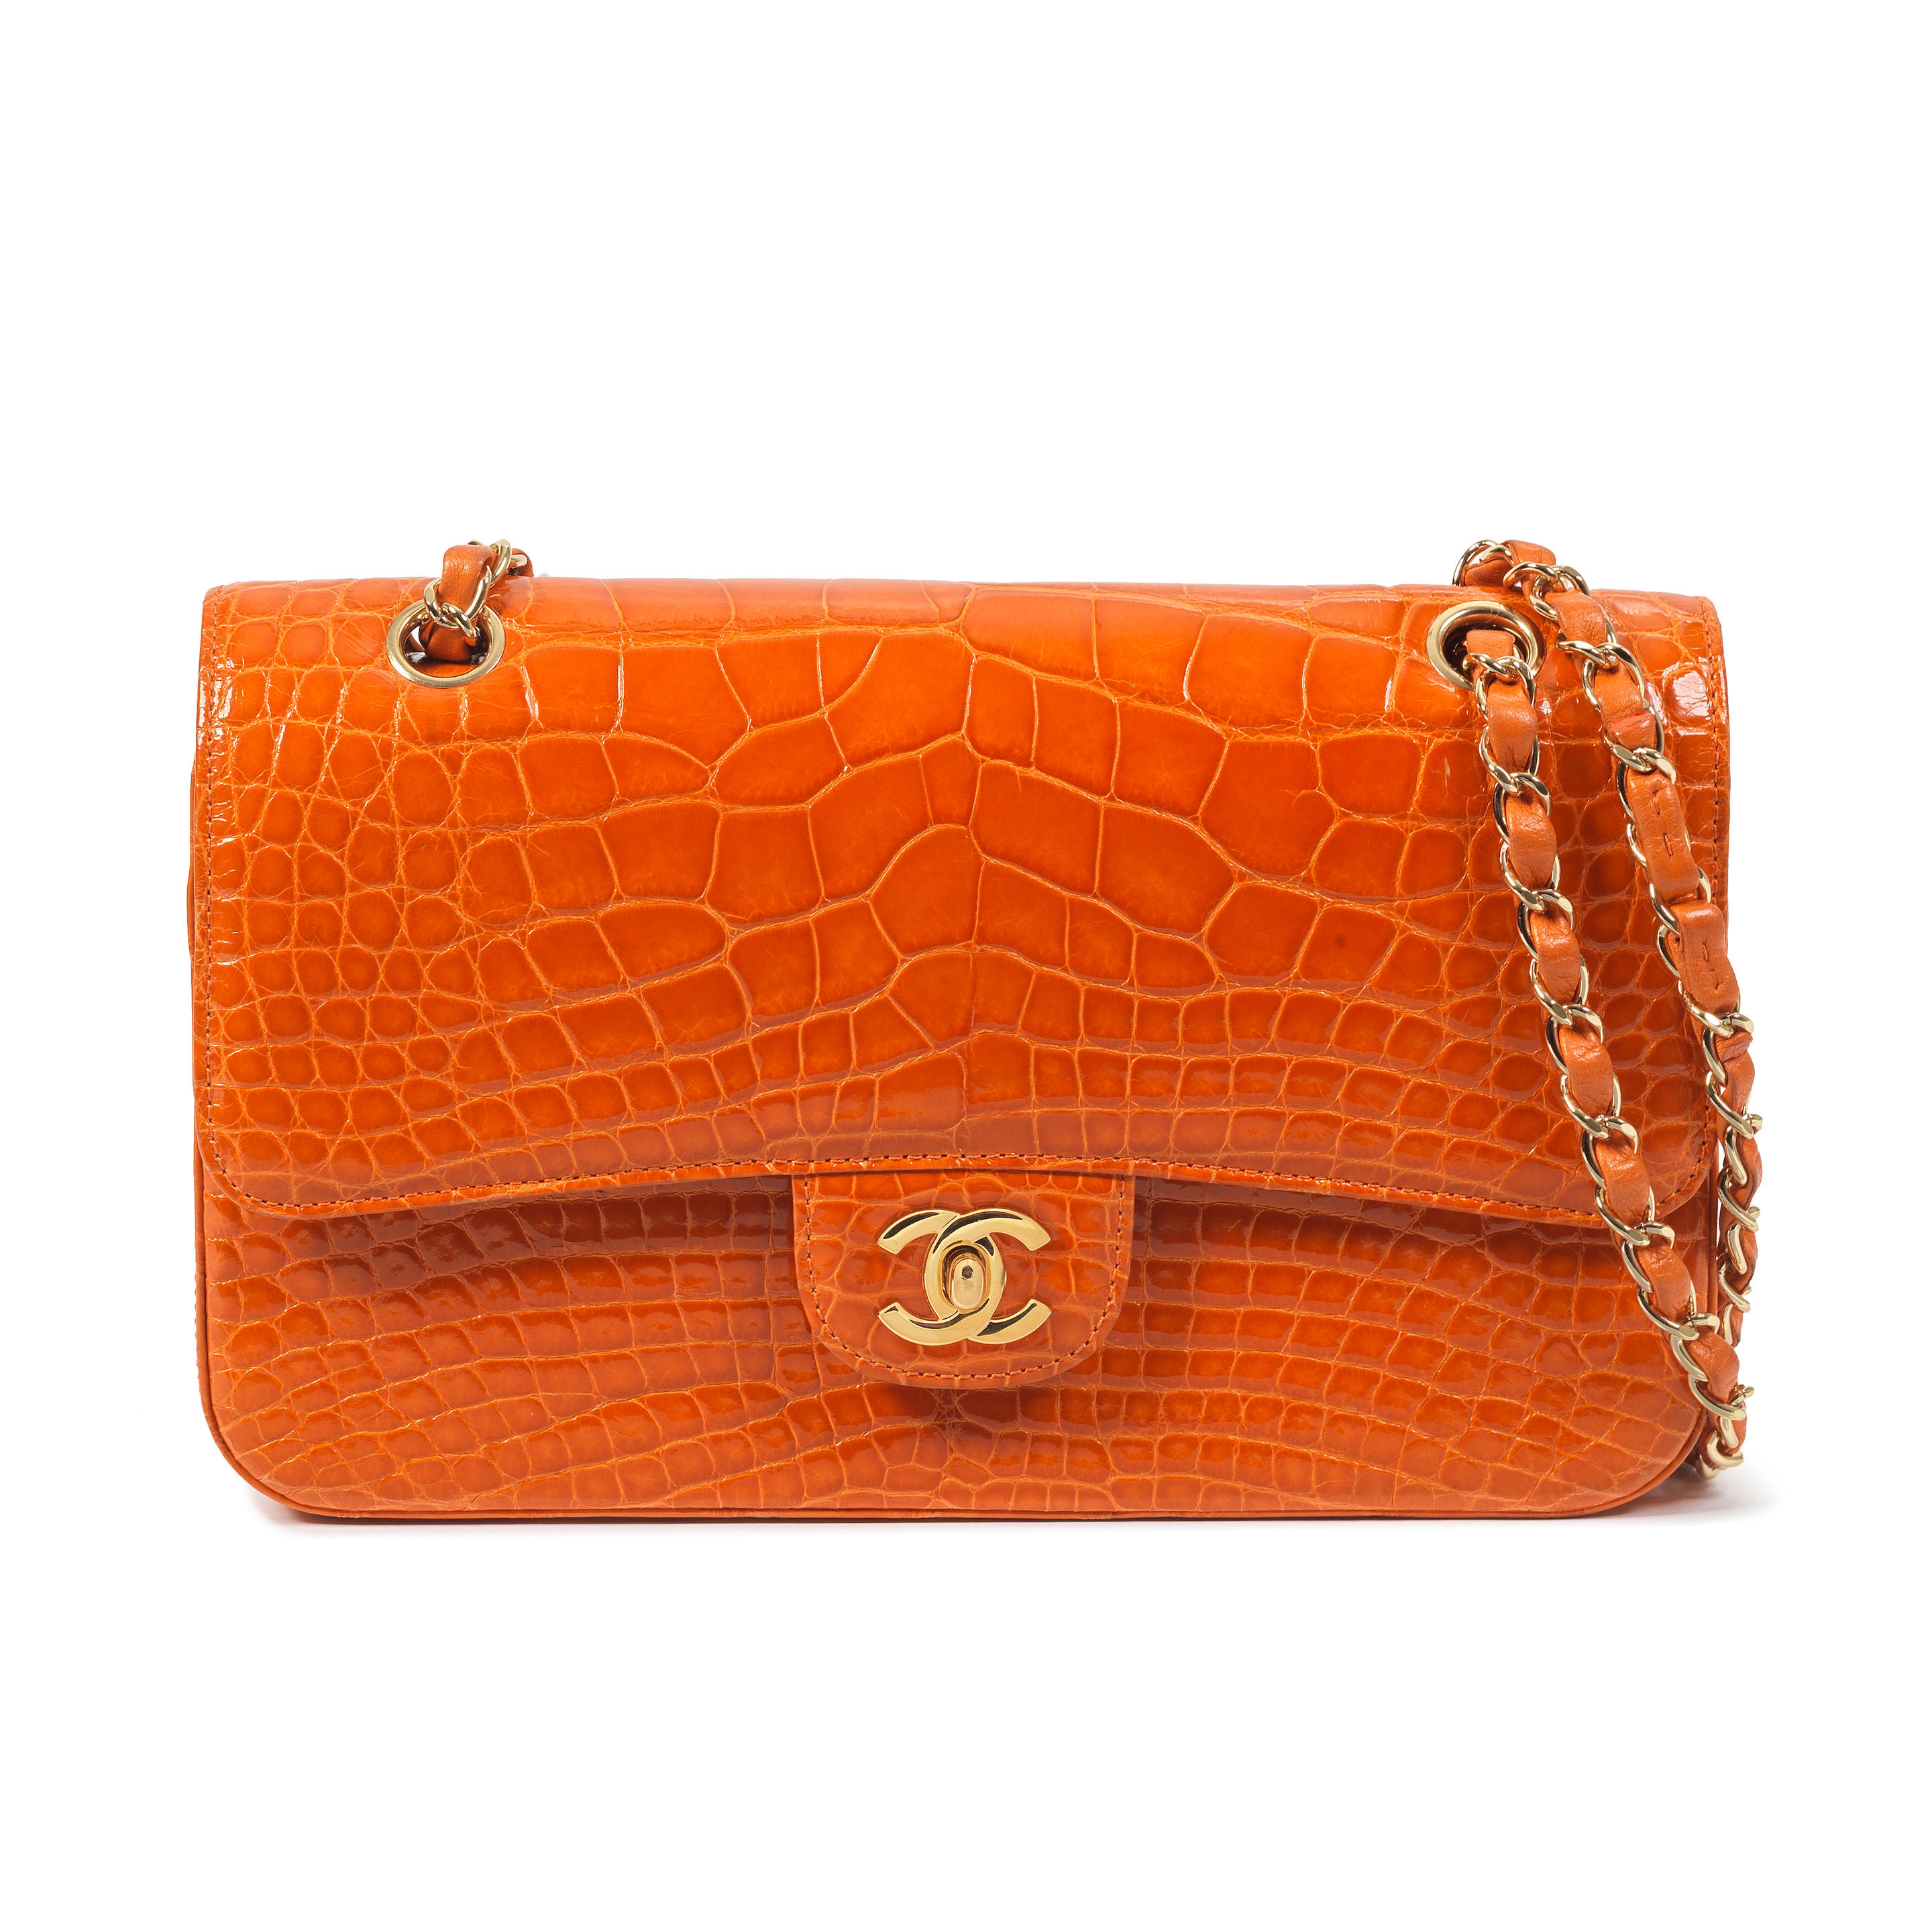 Bonhams : Chanel a Shiny Orange Alligator Classic Double Flap Bag 2009-10  (includes serial sticker and dust bag)